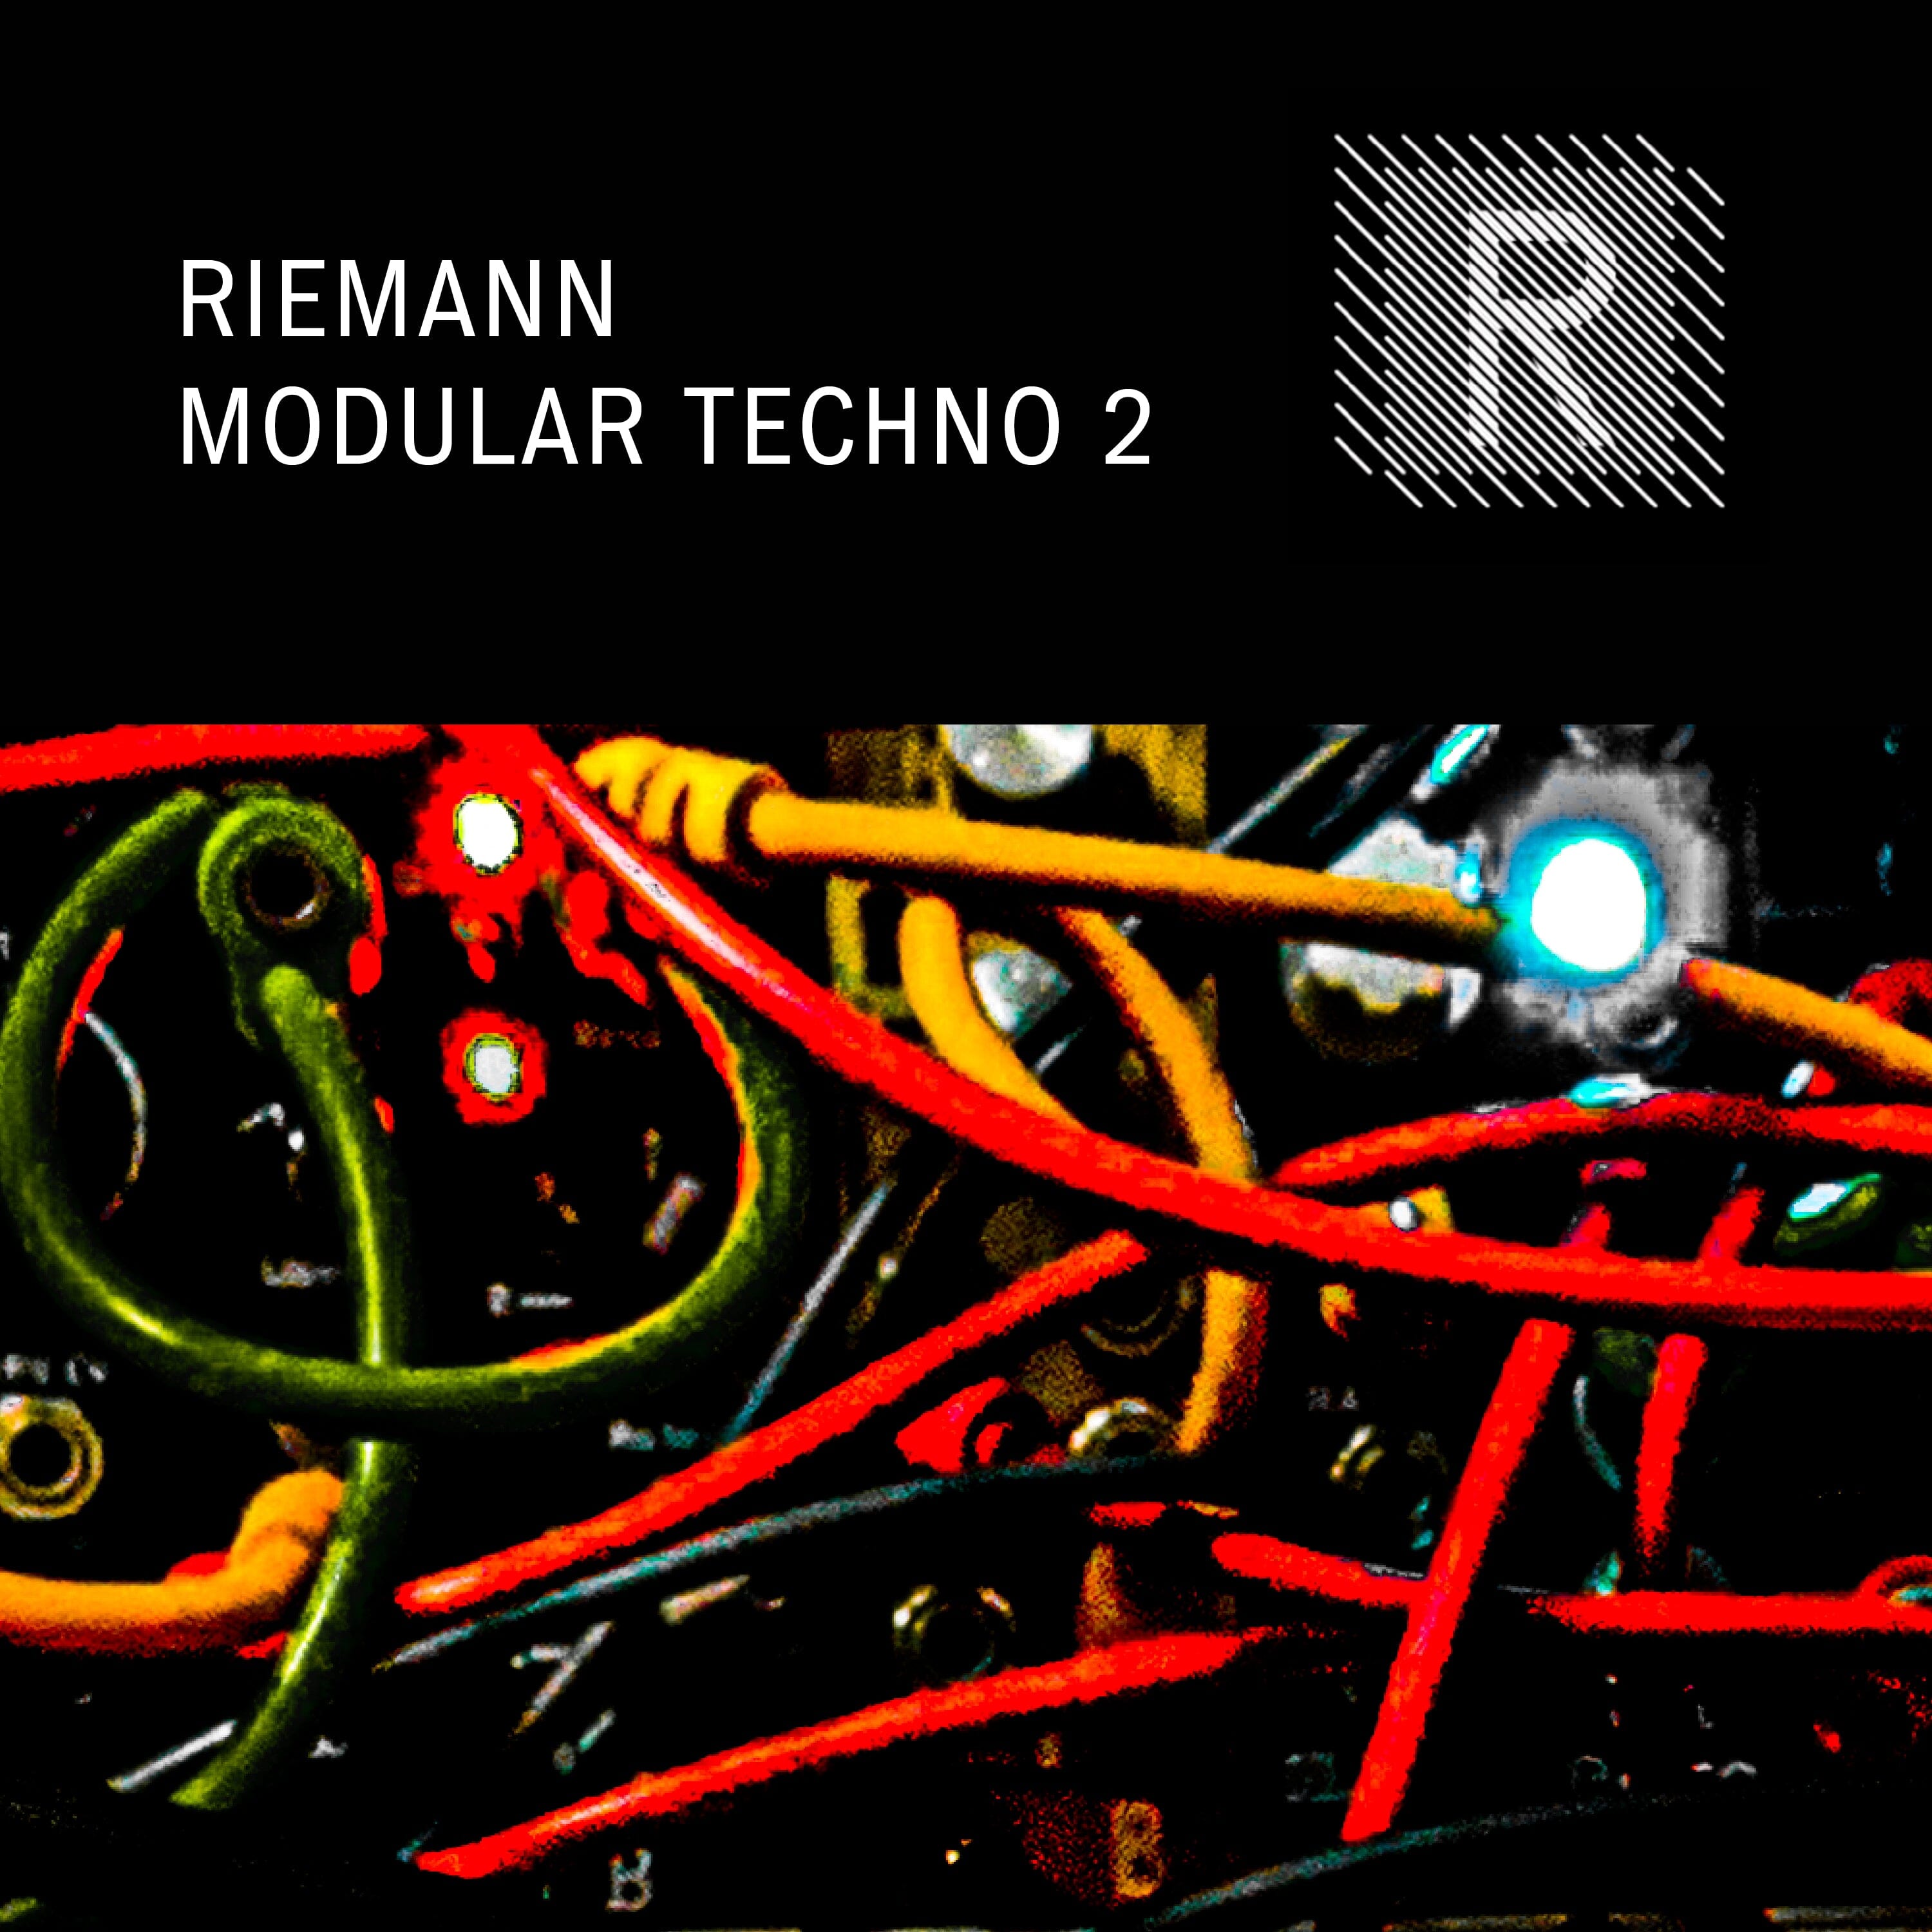 Riemann Modular Techno 2 - Industrial Modular Techno (Oneshots - Loops) Sample Pack Riemann Kollektion